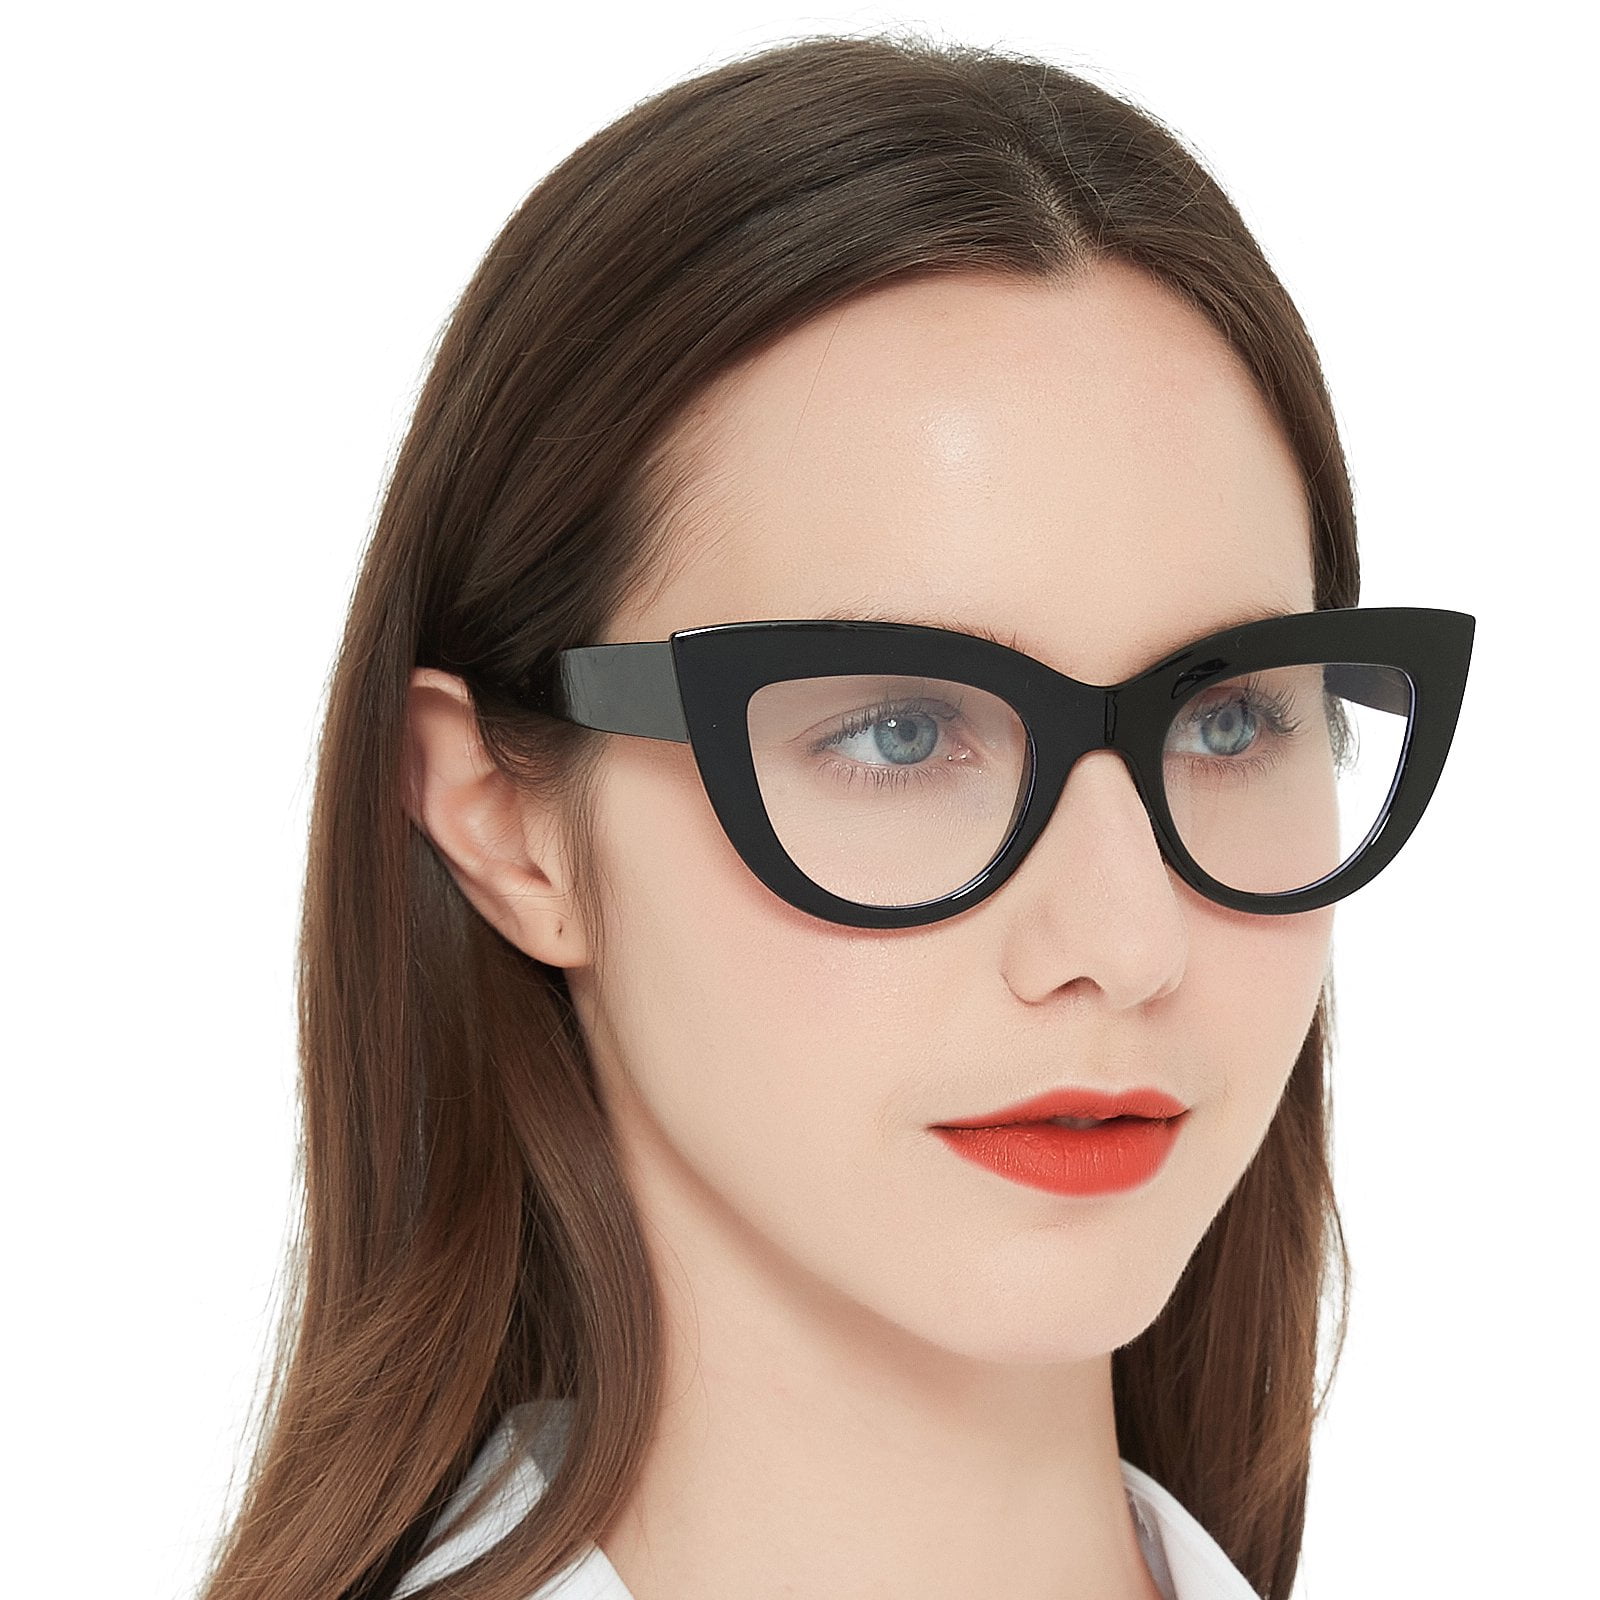 MARE AZZURO Reading Glasses Women Stylish Readers 0 1.0 1.25 1.5 1.75 2.0 2.25 2.5 2.75 3.0 3.5 4.0 5.0 6.0 